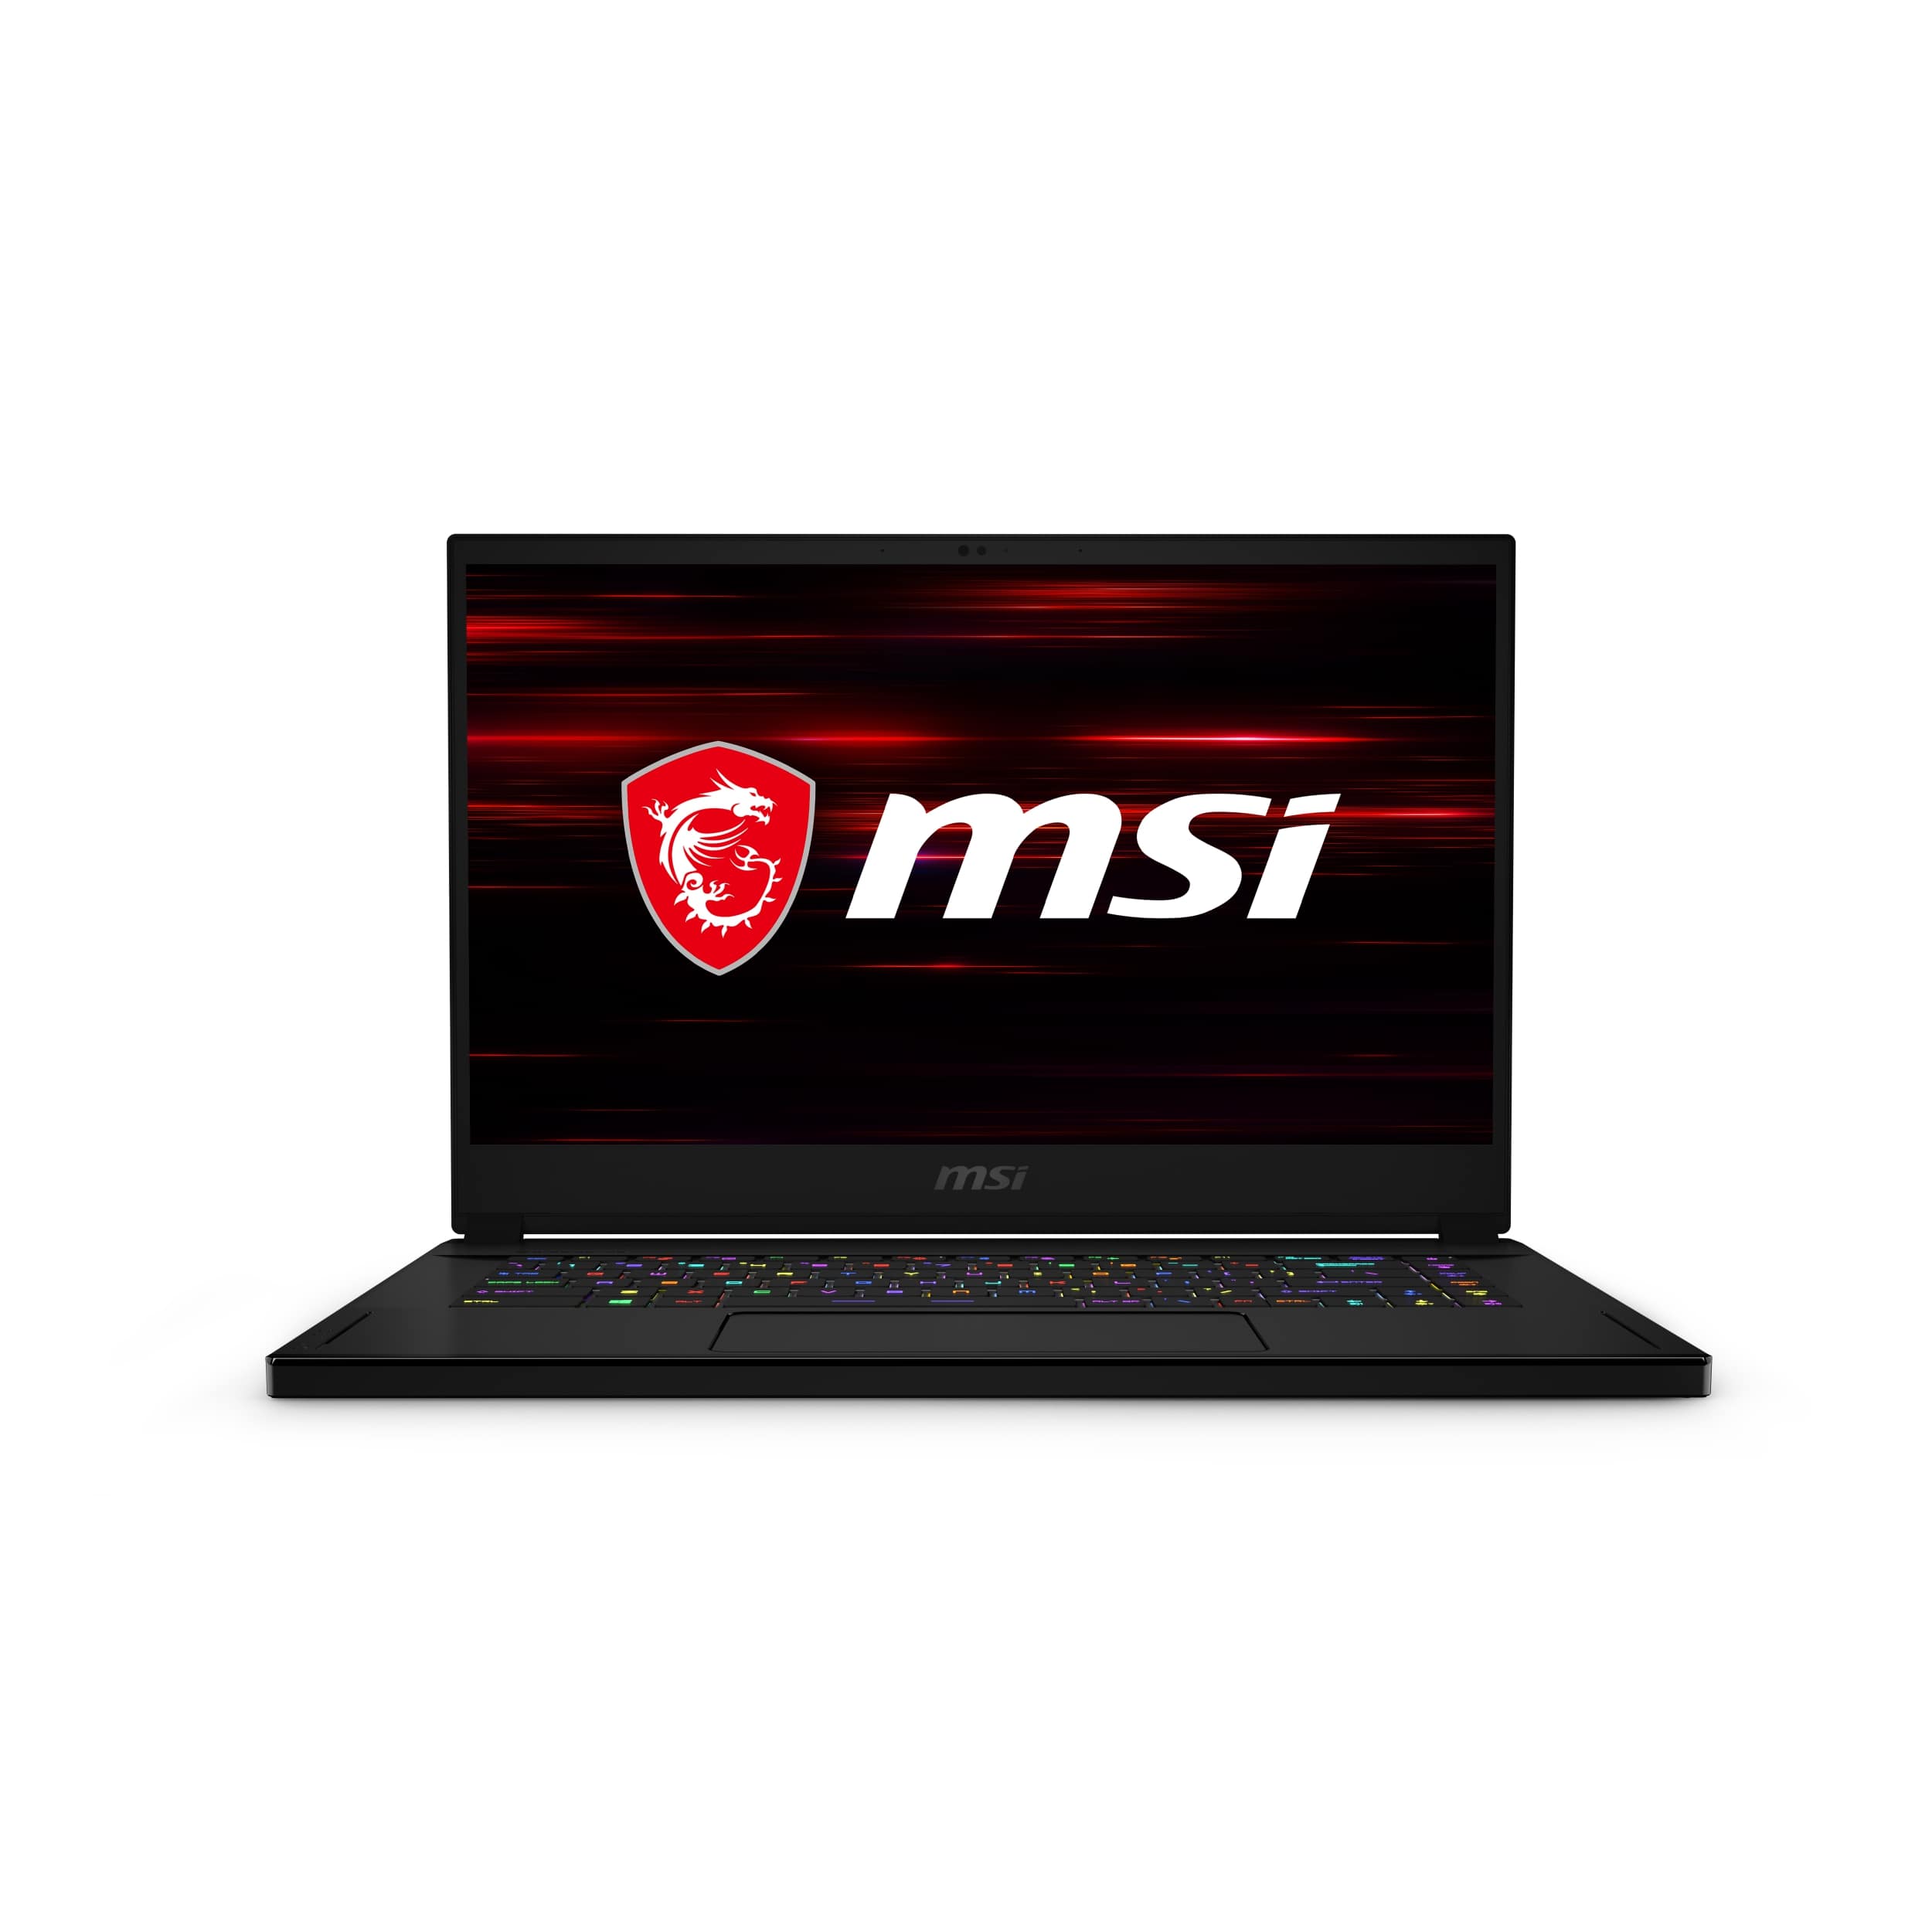 MSI GS66 Stealth 15.6" Gaming Laptop - Intel Core i7-10750H - 16GB - 512GB SSD - NVIDIA GeForce RTX2060 - Windows 10 Pro - Core Black - image 1 of 5